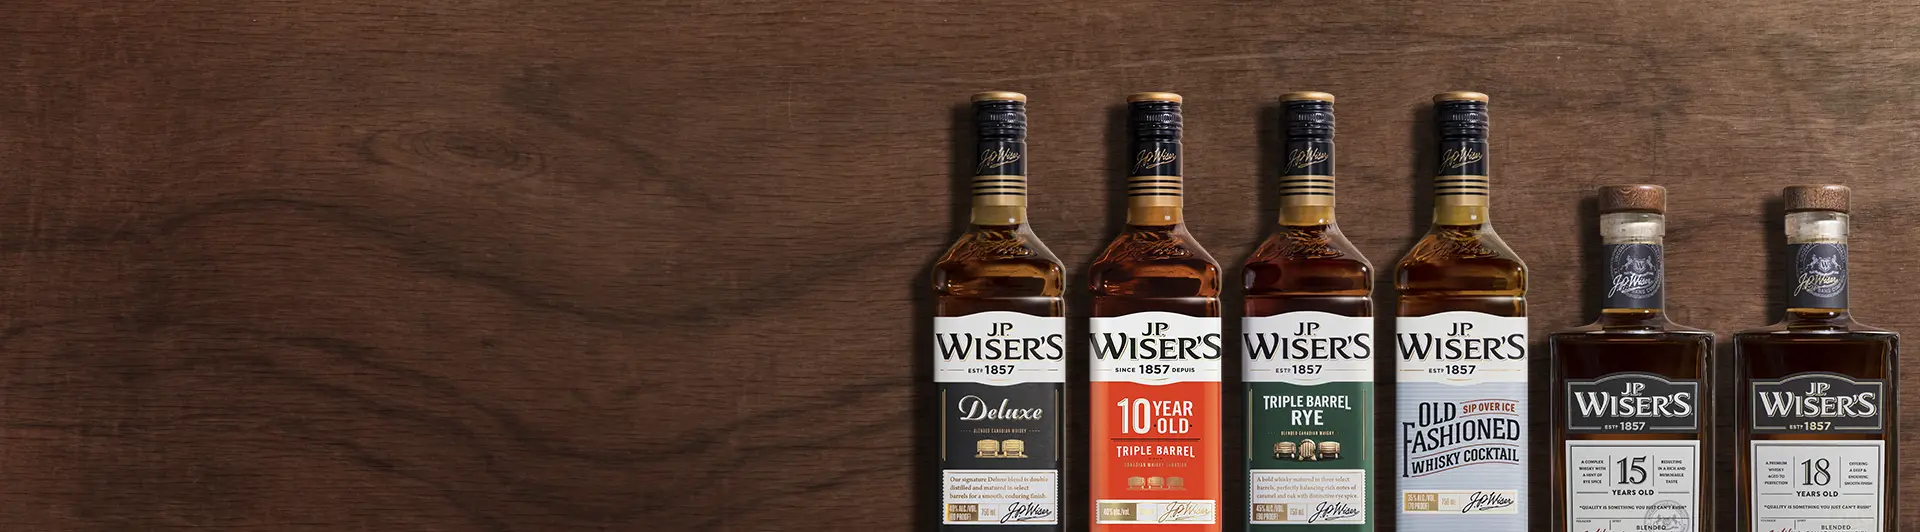 J.P. Wiser's American Whisky Family Portfolio